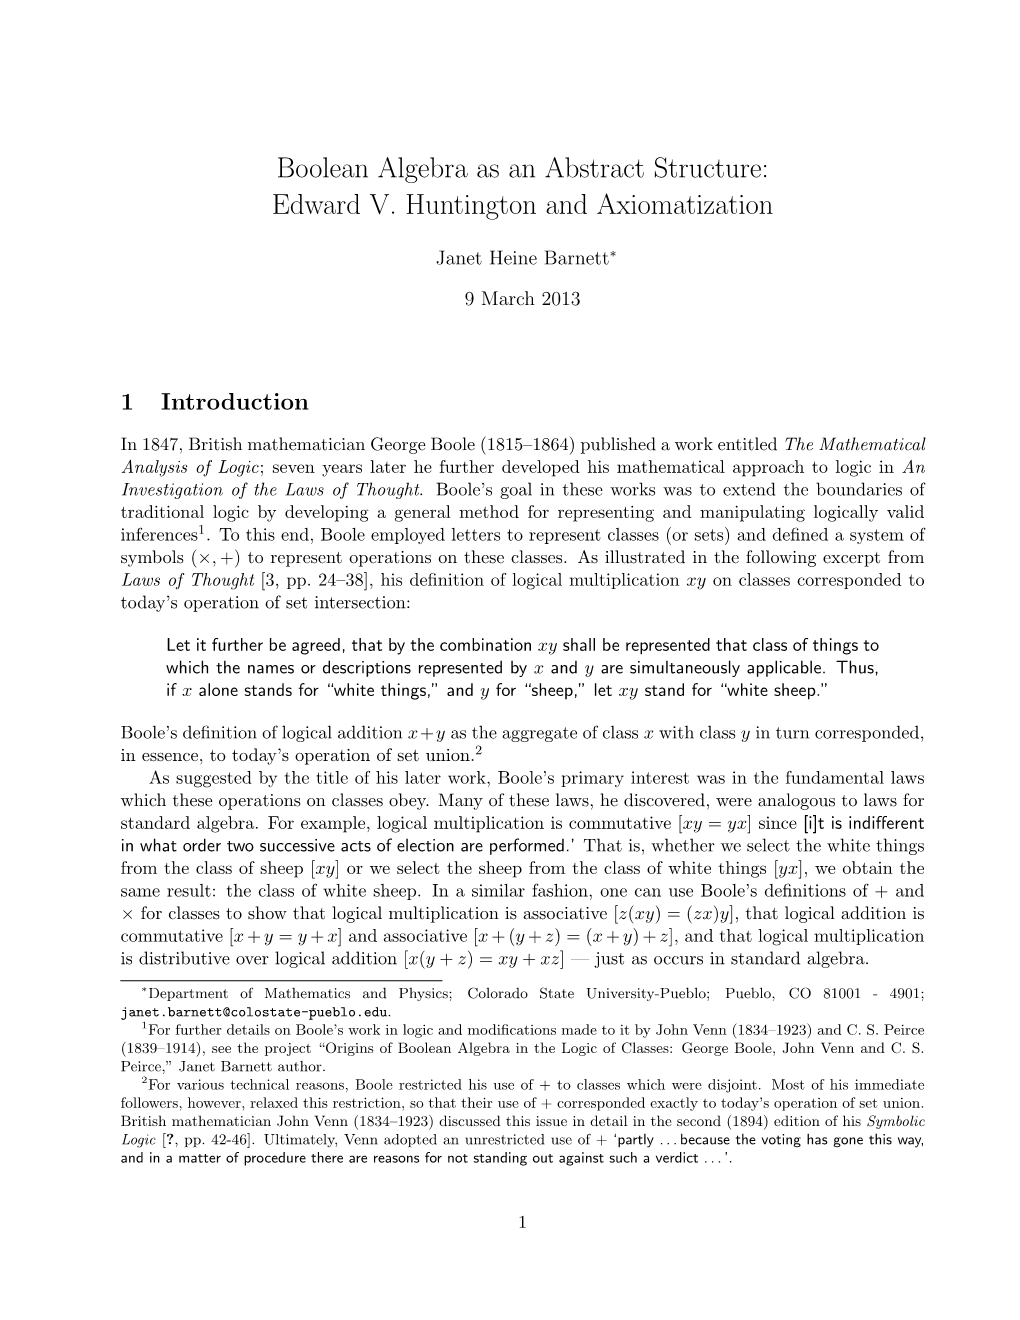 Boolean Algebra As an Abstract Structure: Edward V. Huntington and Axiomatization